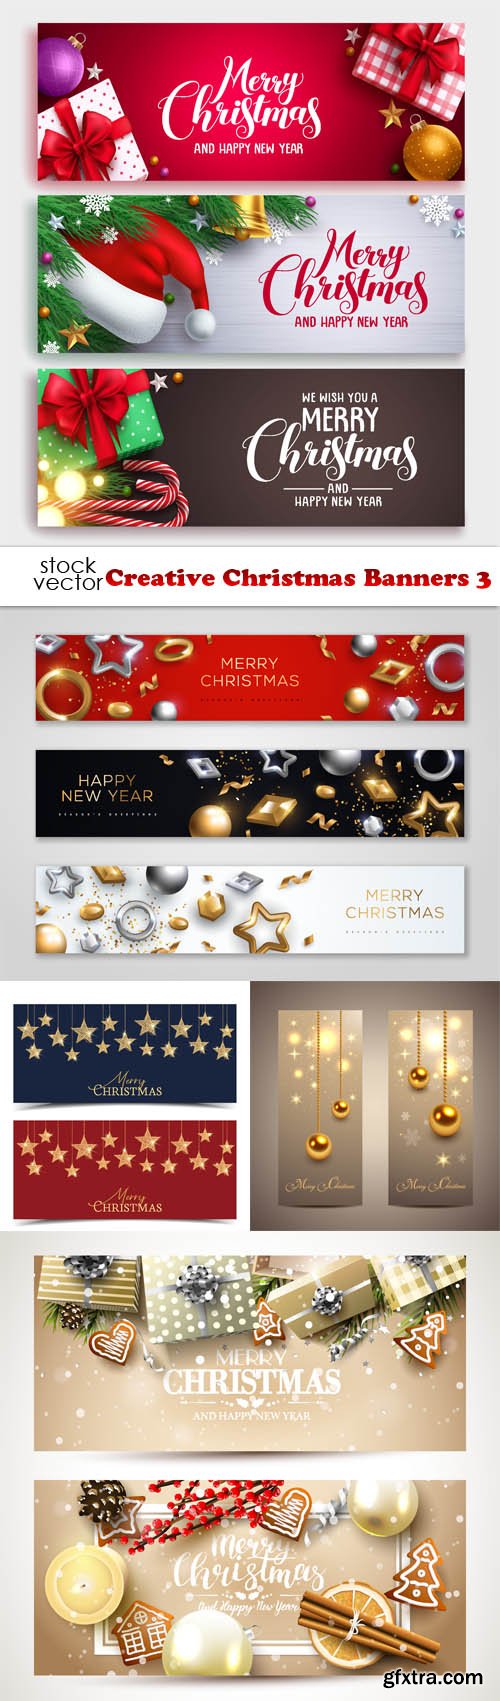 Vectors - Creative Christmas Banners 3